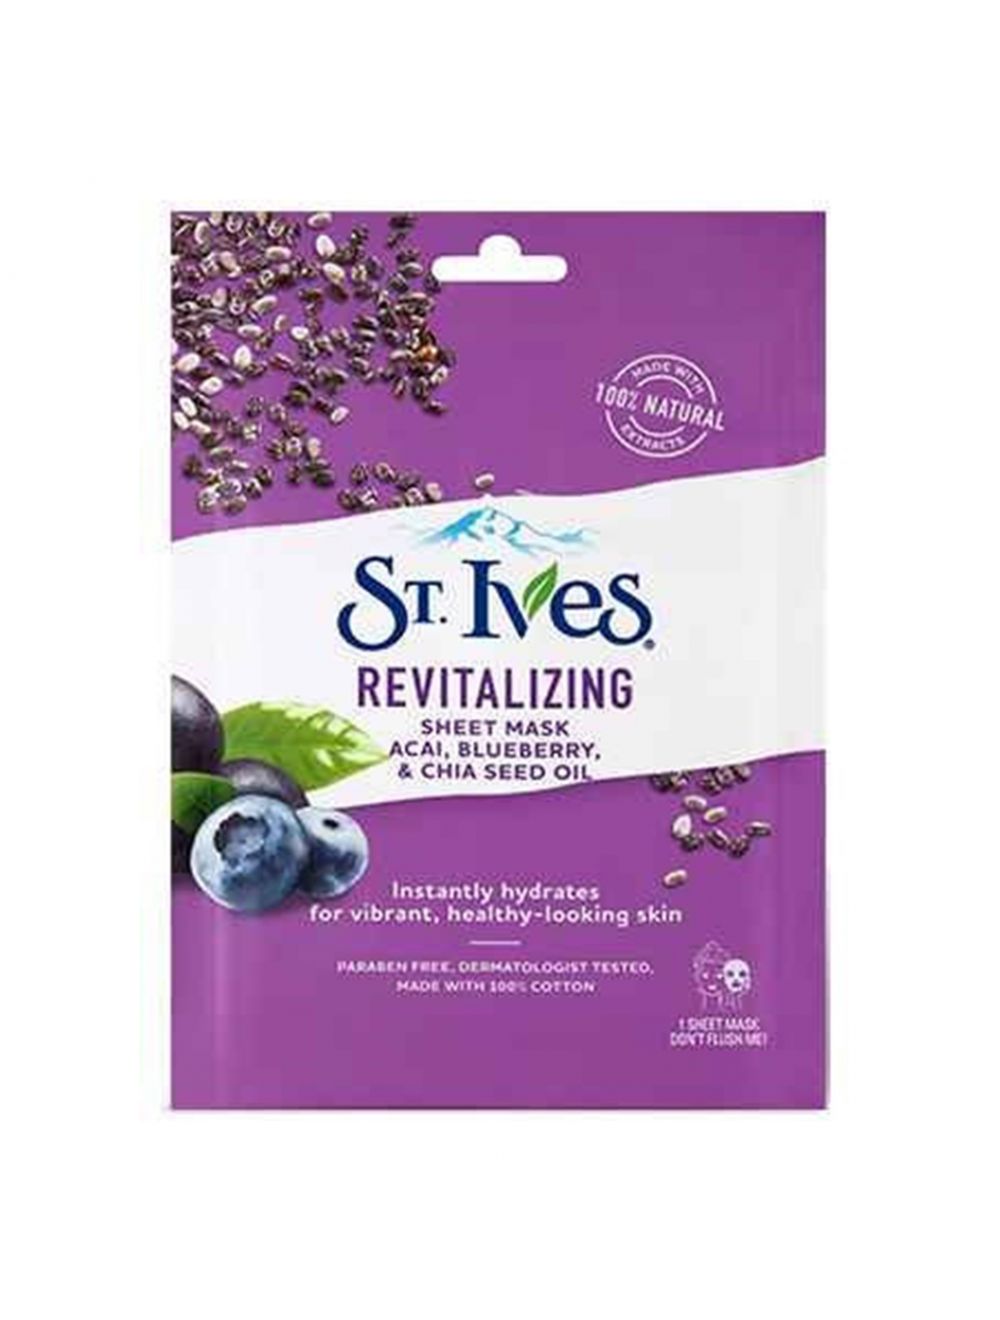 St. Ives Revitalizing Acai Blueberry & Chia Seed Oil Sheet Mask (1Pcs)